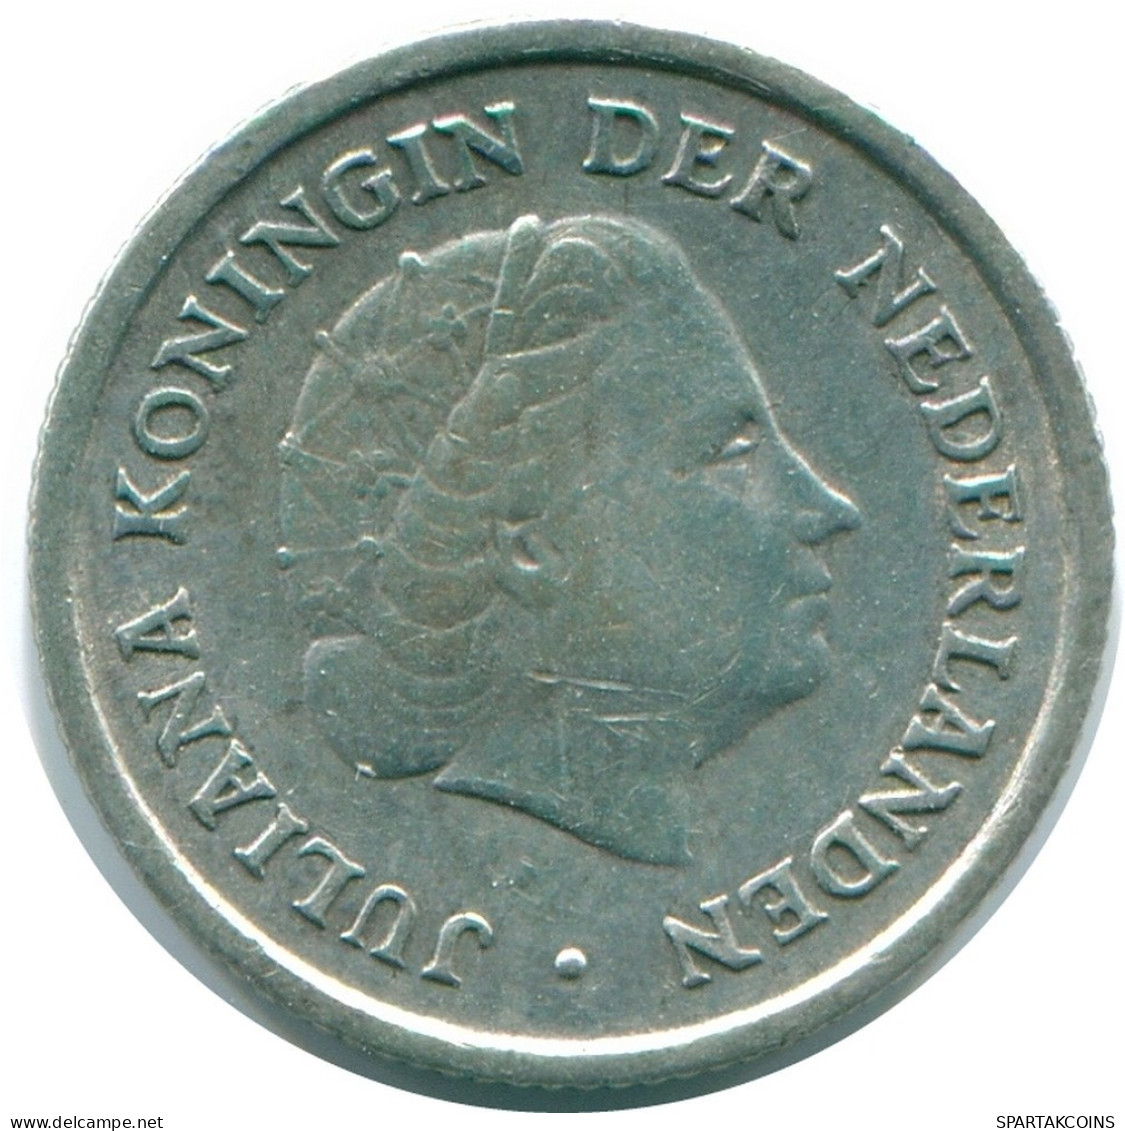 1/10 GULDEN 1962 NETHERLANDS ANTILLES SILVER Colonial Coin #NL12384.3.U.A - Netherlands Antilles